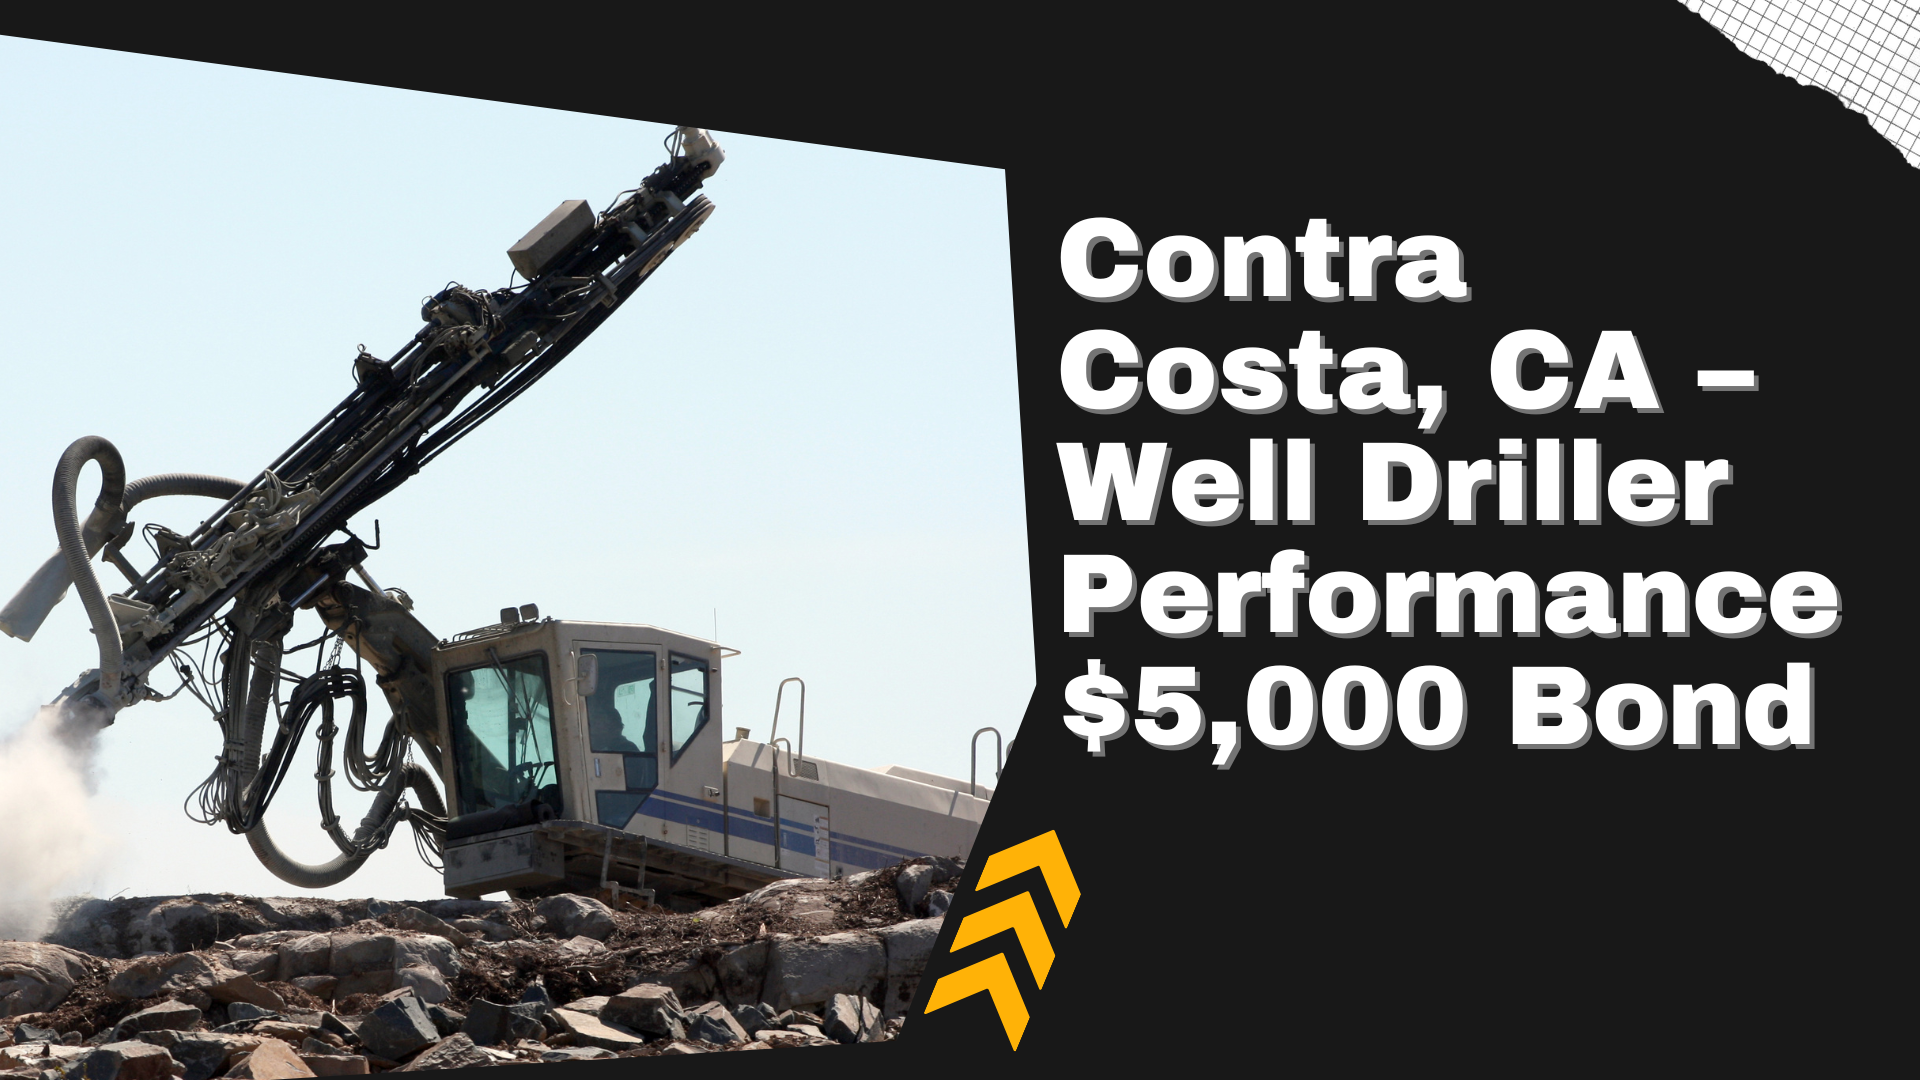 Surety Bond-Contra Costa, CA – Well Driller Performance $5,000 Bond